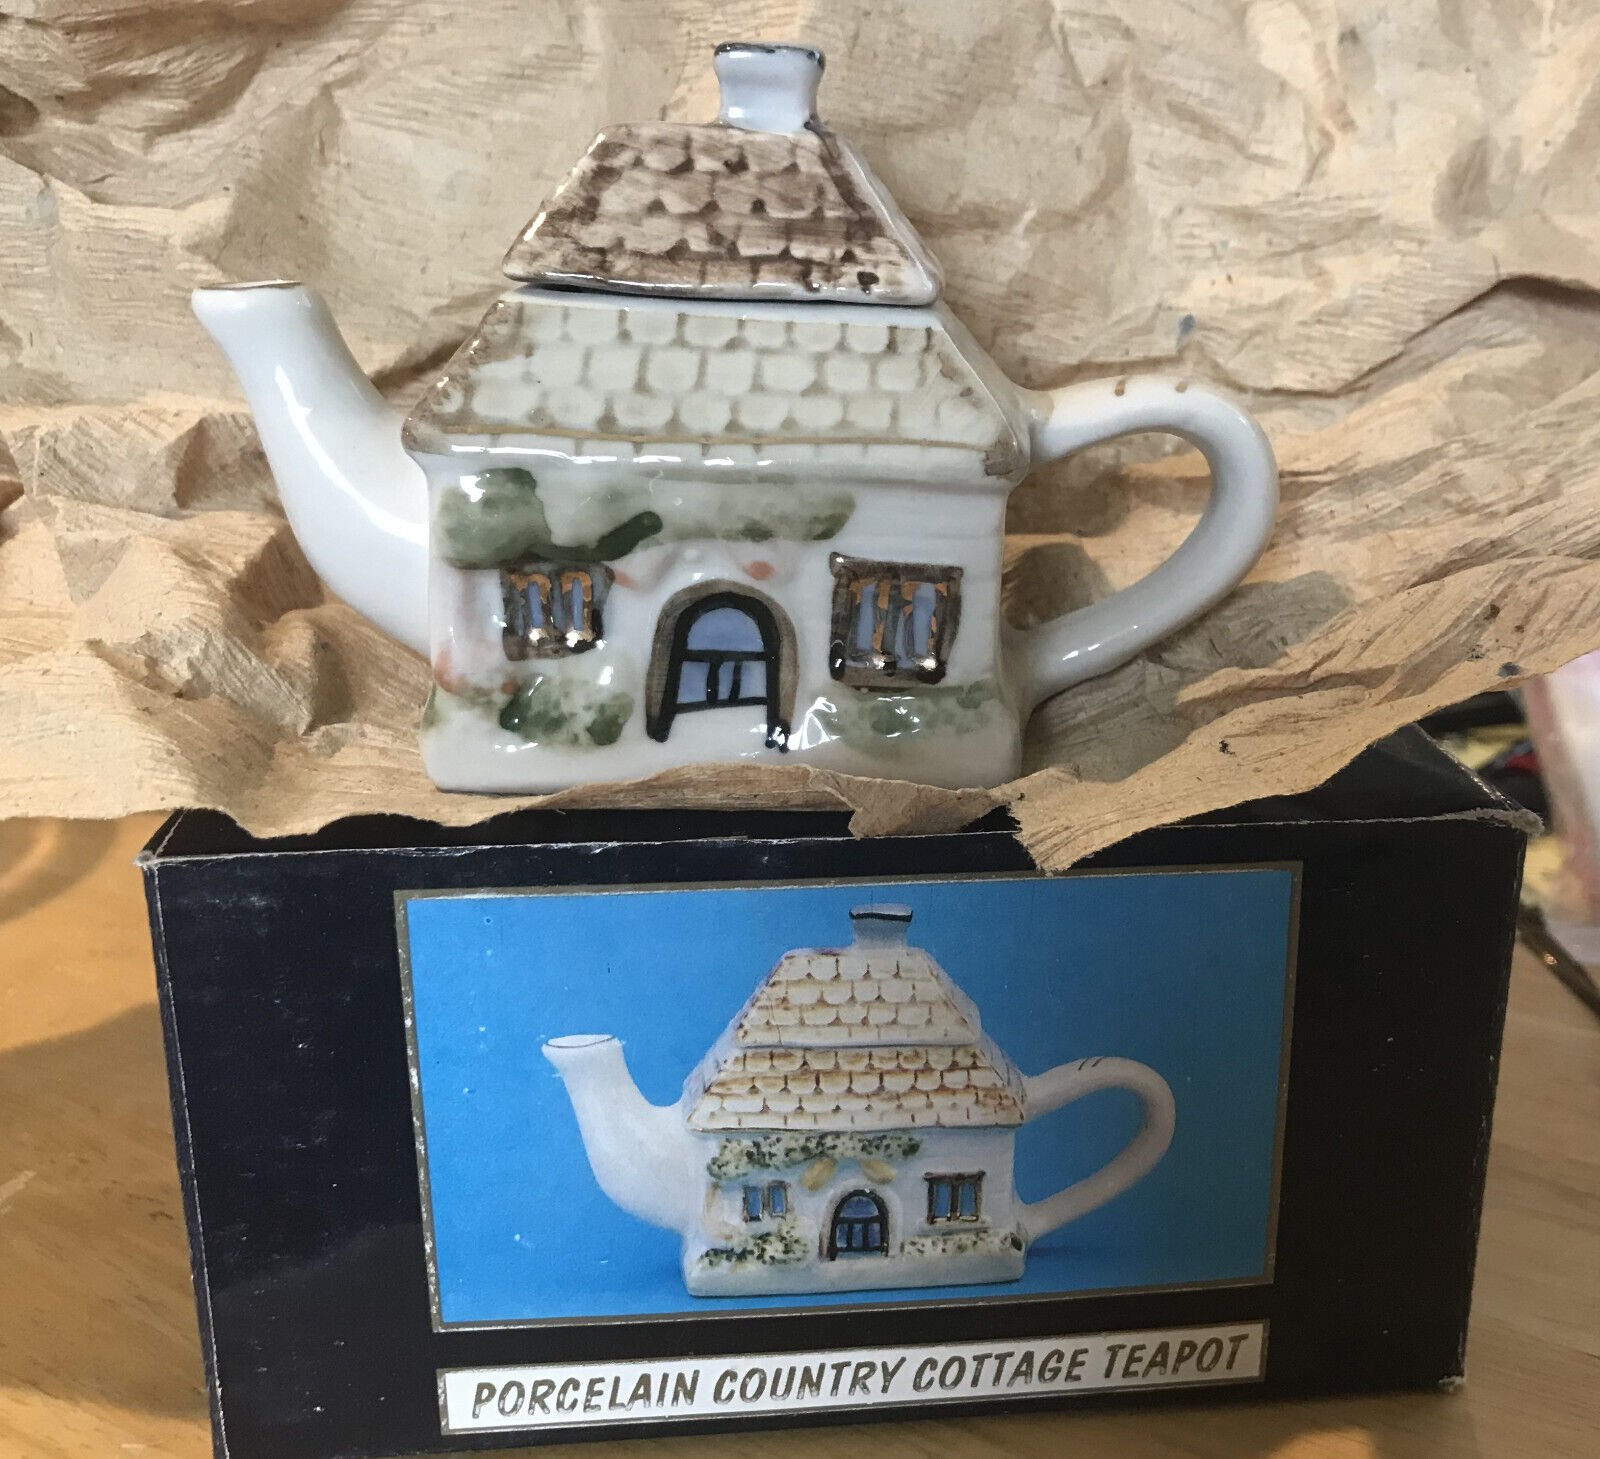 Porcelain Country Cottage Teapot